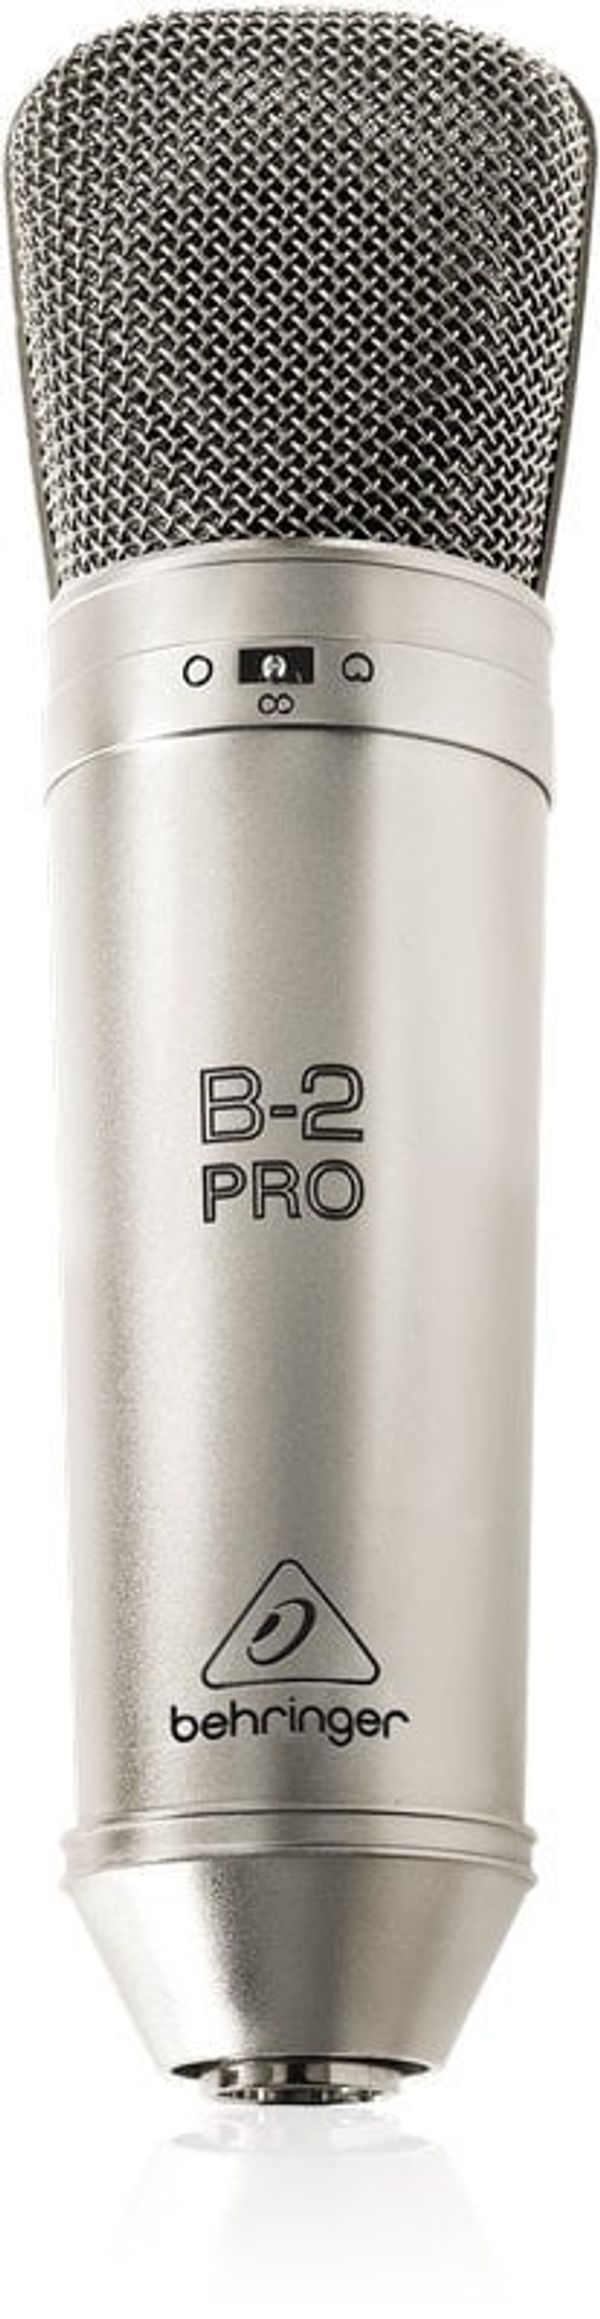 Behringer Behringer B-2PRO Kondenzatorski studijski mikrofon